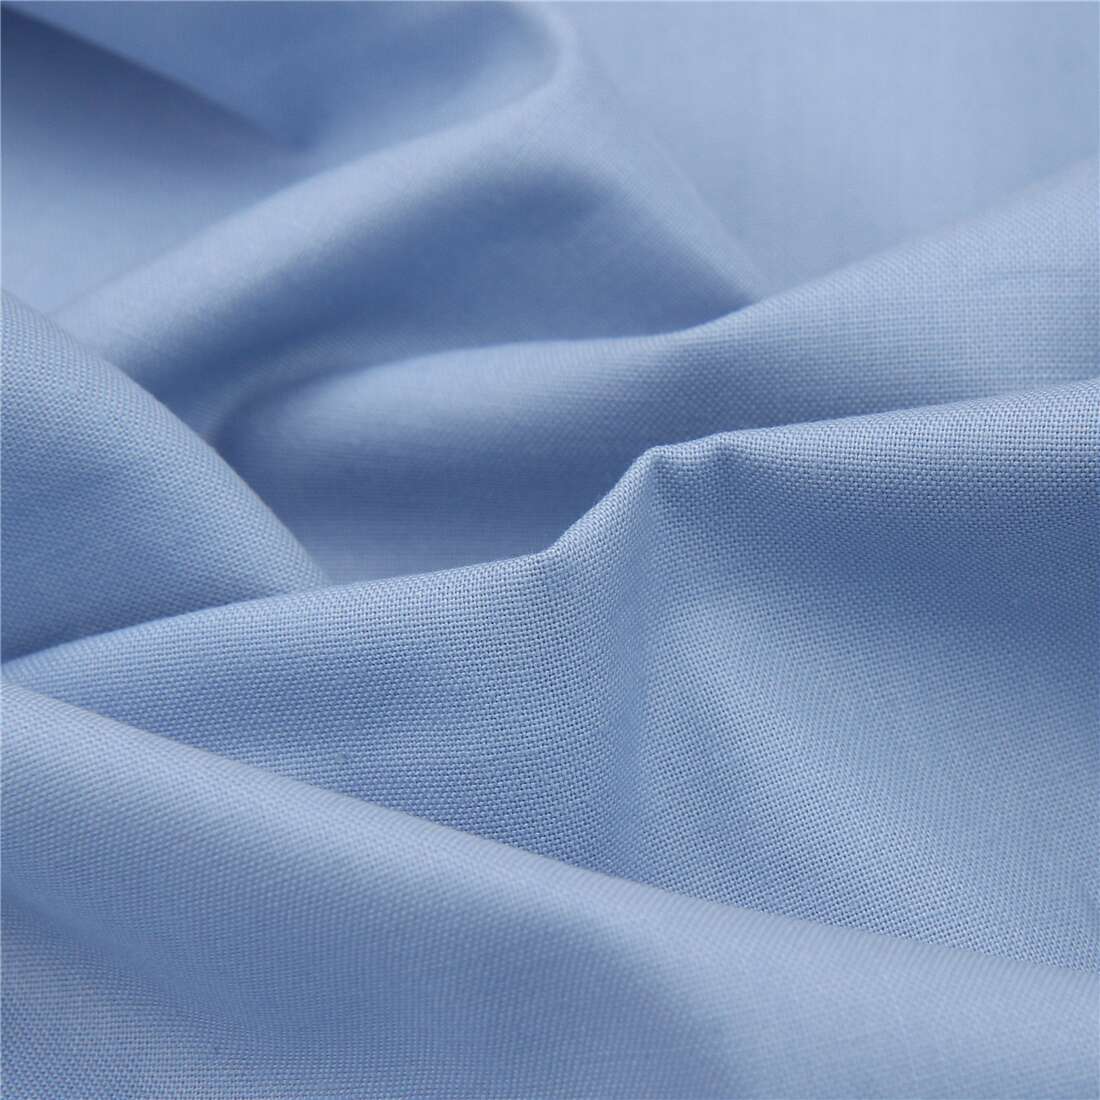 Kona cotton solid light blue cotton fabric by Robert Kaufman - modeS4u